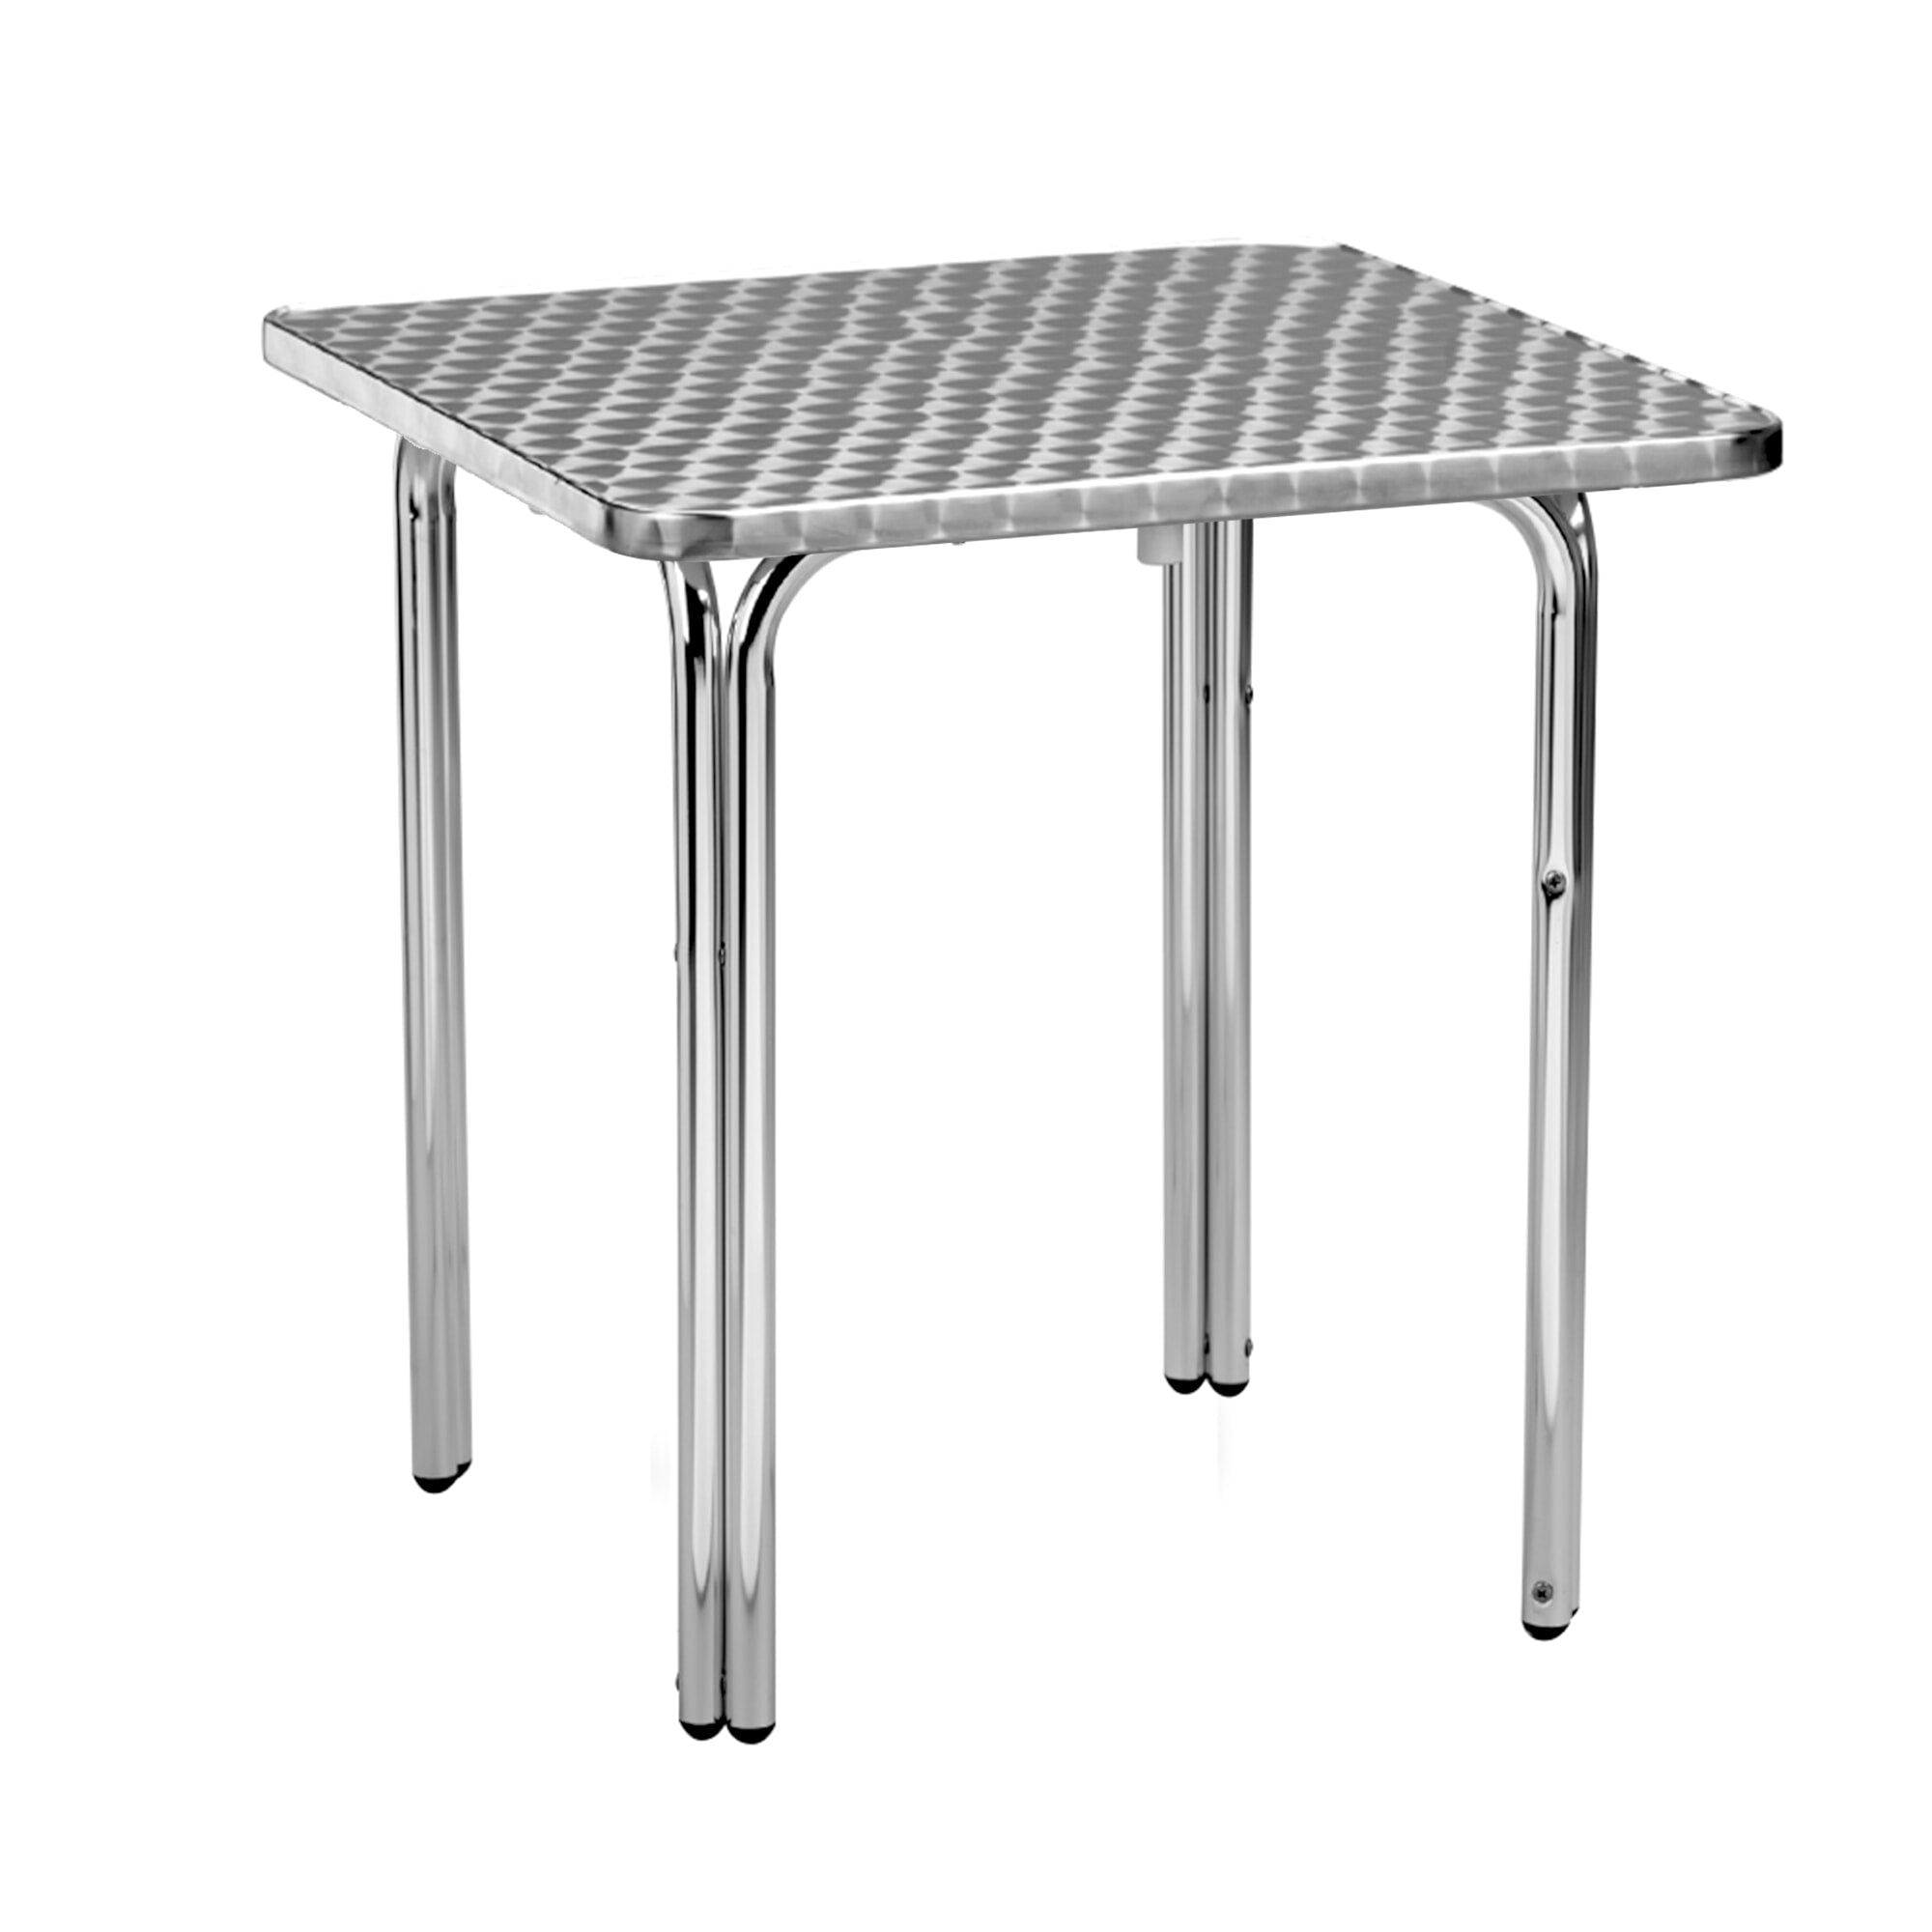 Garbar Raya Square Table Outdoor 70x70 Satinless gray